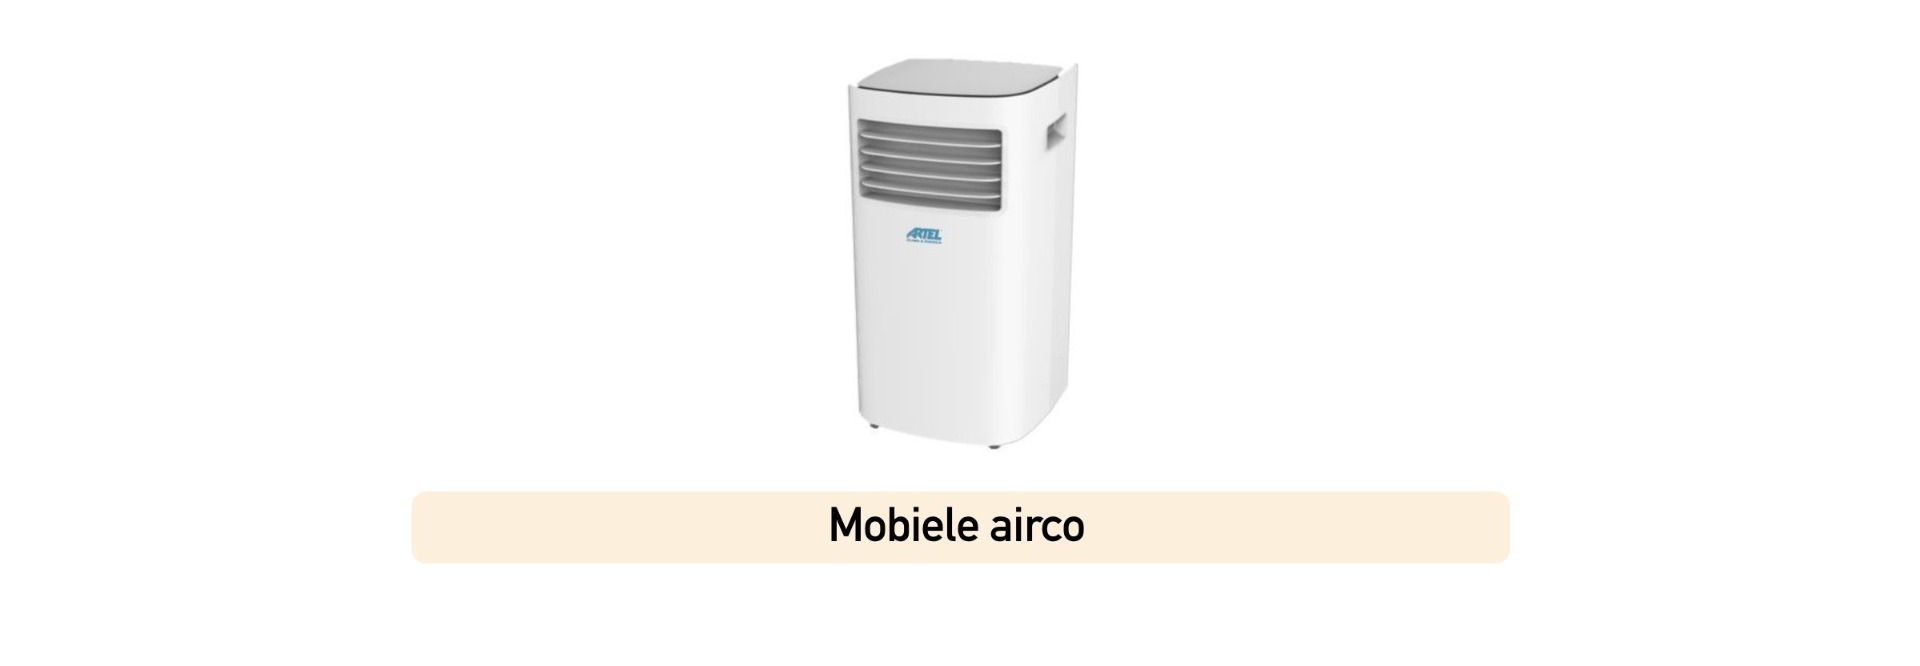 Mobiele airco